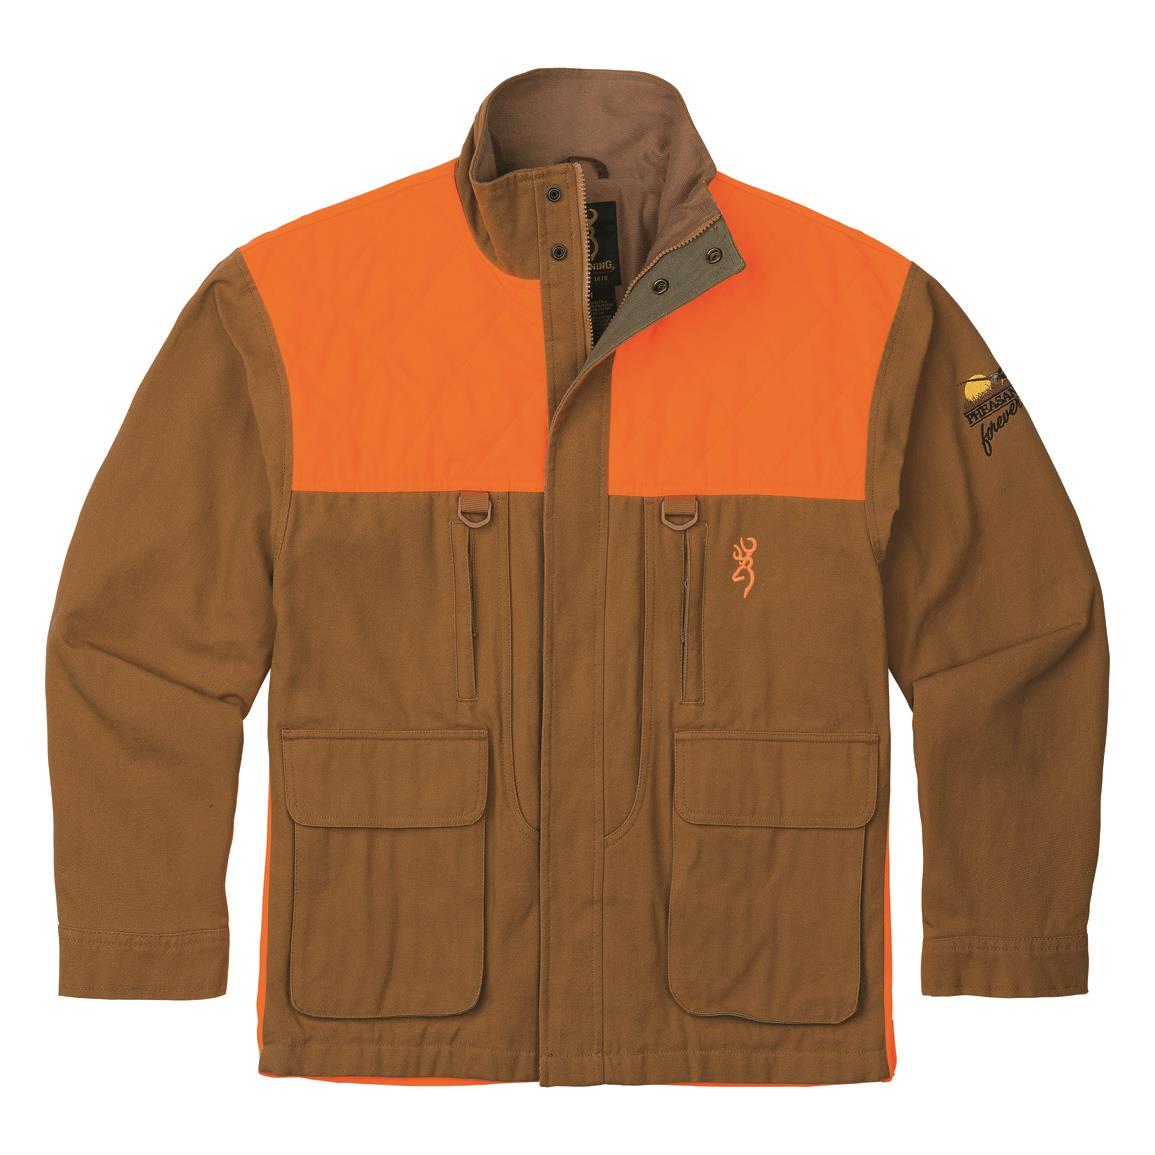 Browning Men's Pheasants Forever Upland Hunting Jacket, Blaze/tan